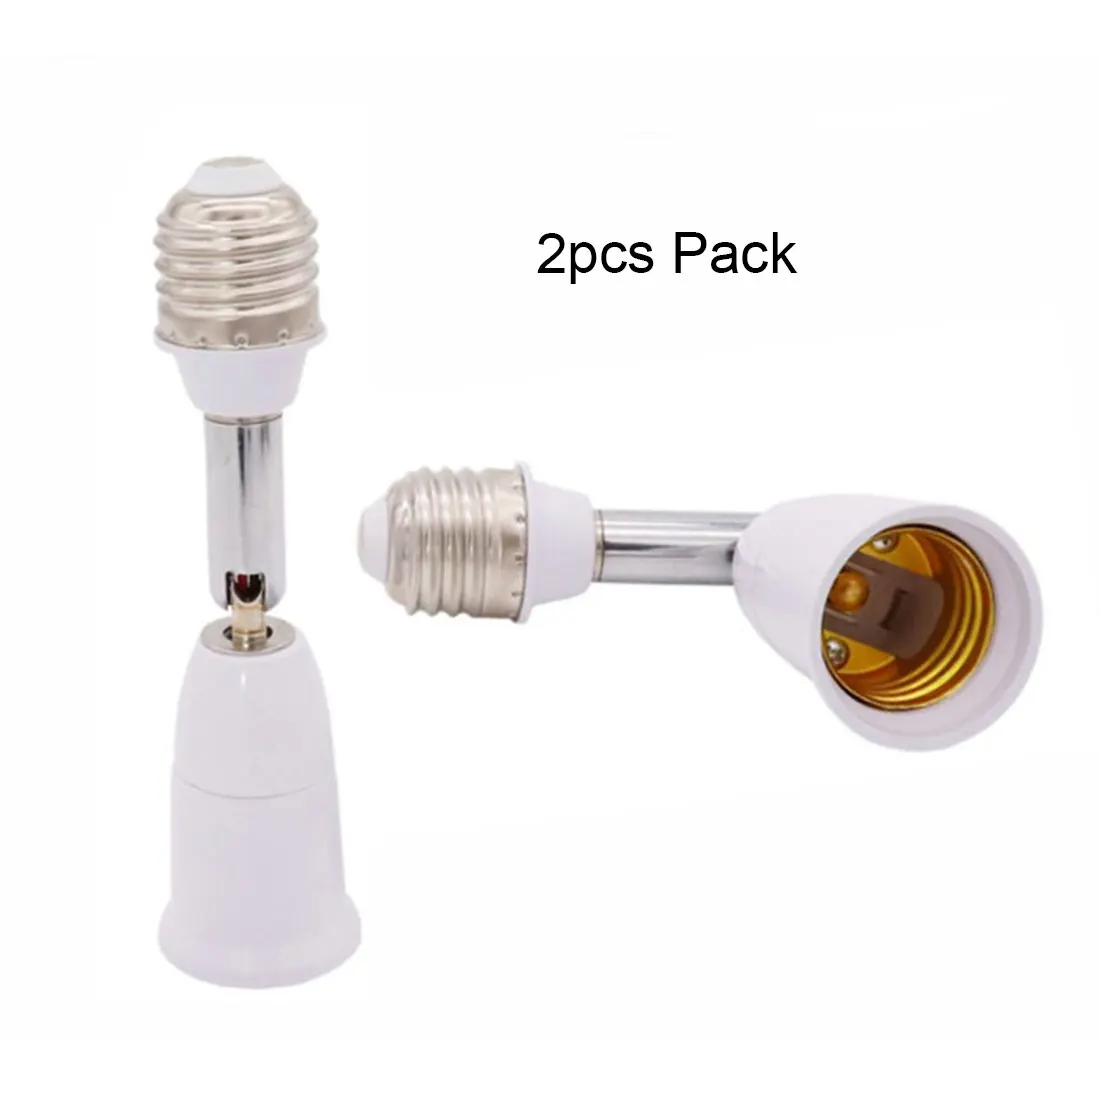 E27 to E27 Light Lamp Bulb All Direction Extension Adapter Extenders for Home Light Fixtures Socket Converter. 